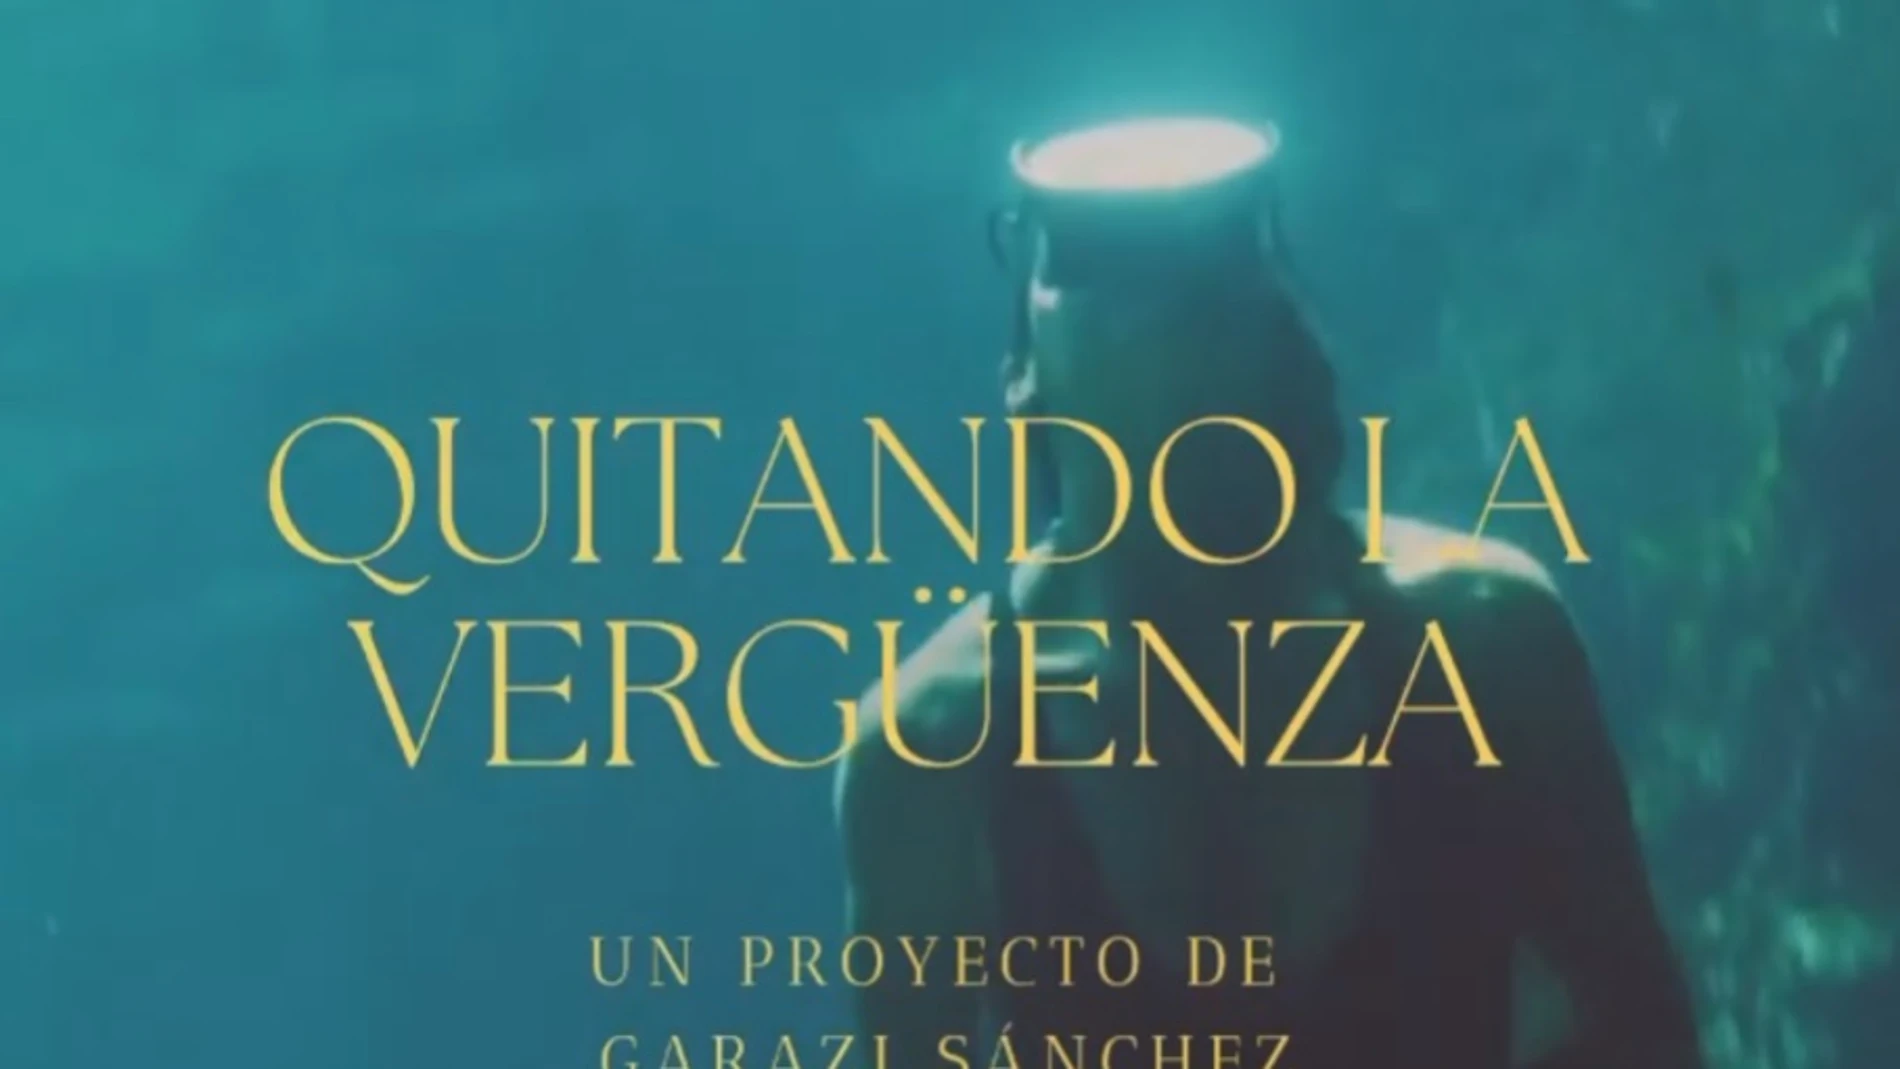 Garazi Sánchez estrena 'Quitando la vergüenza', su segundo documental